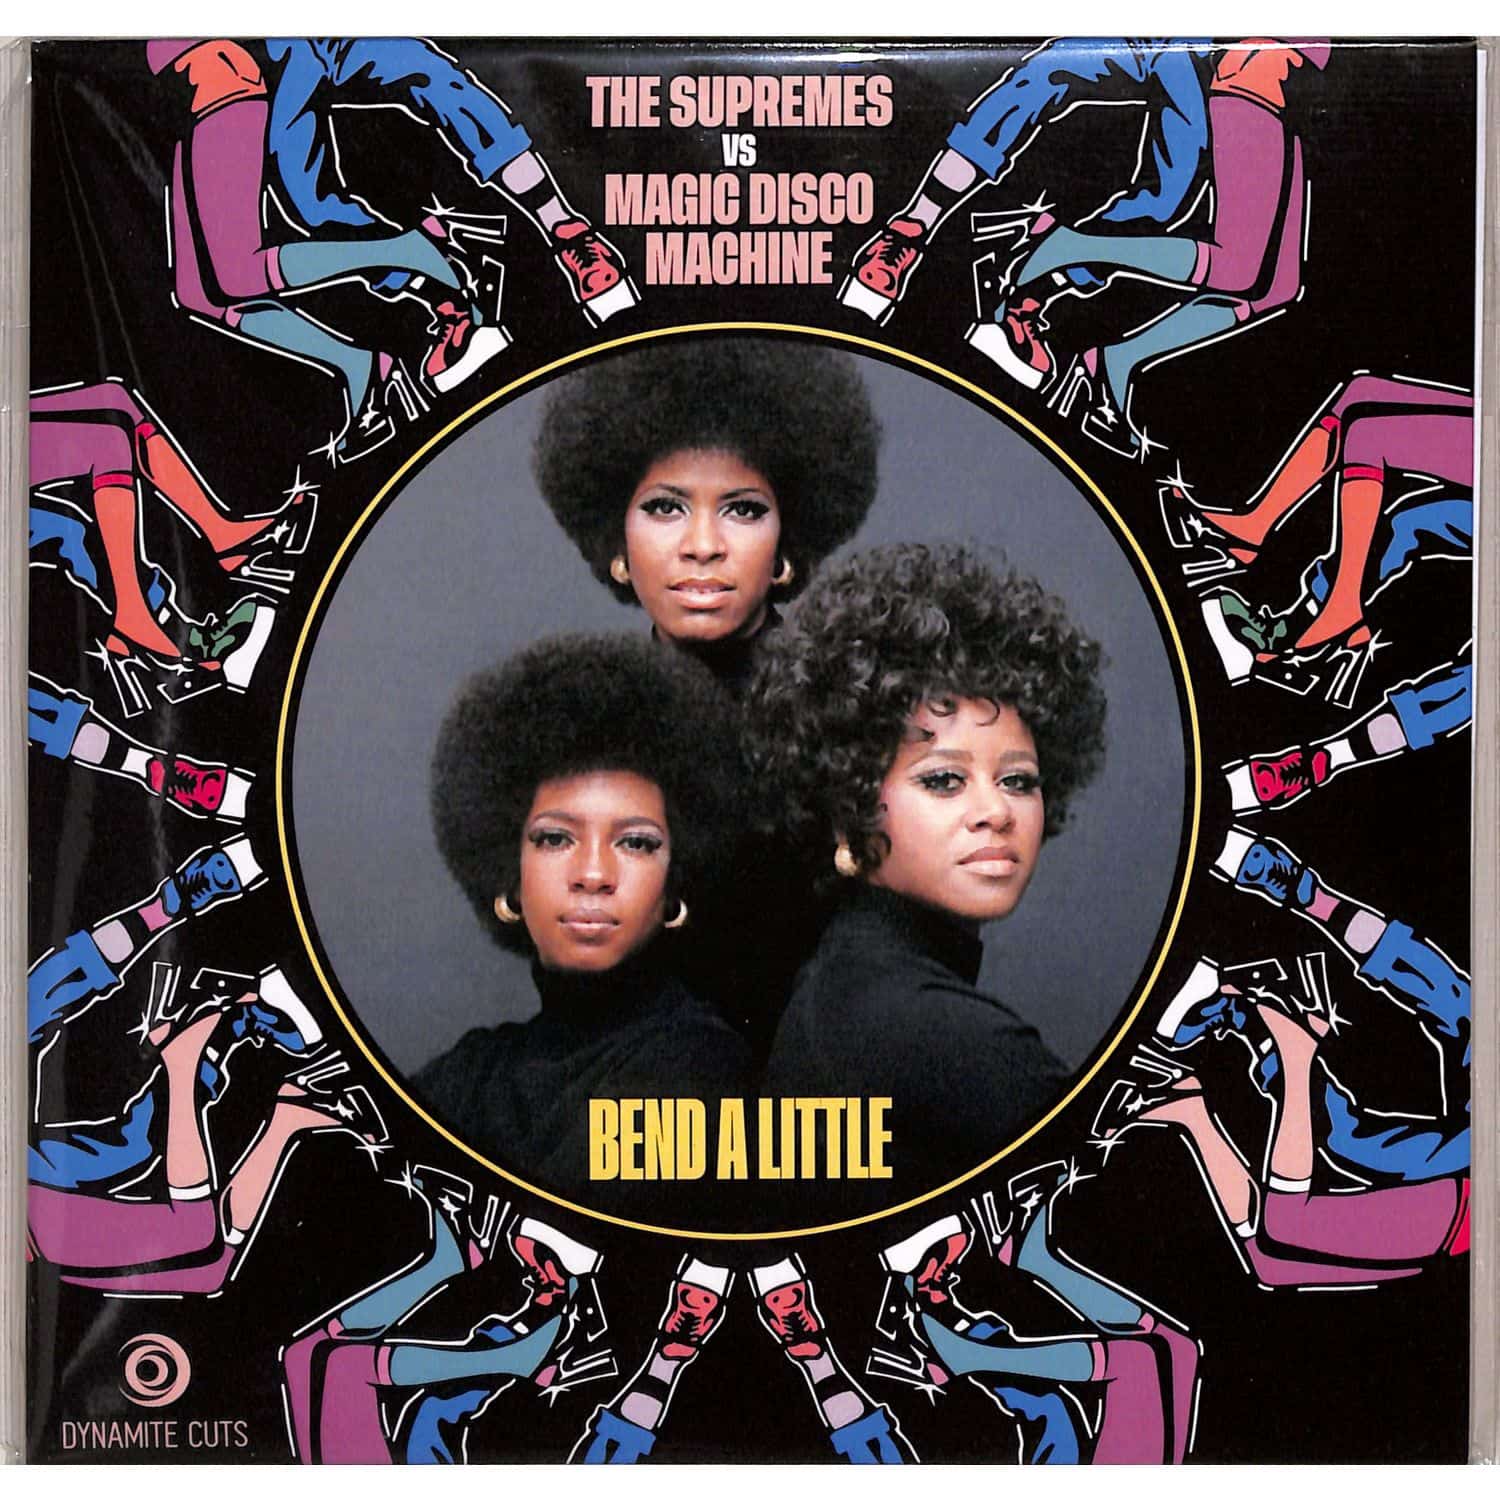 The Supremes & Magic Disco Machine - BEND A LITTLE 